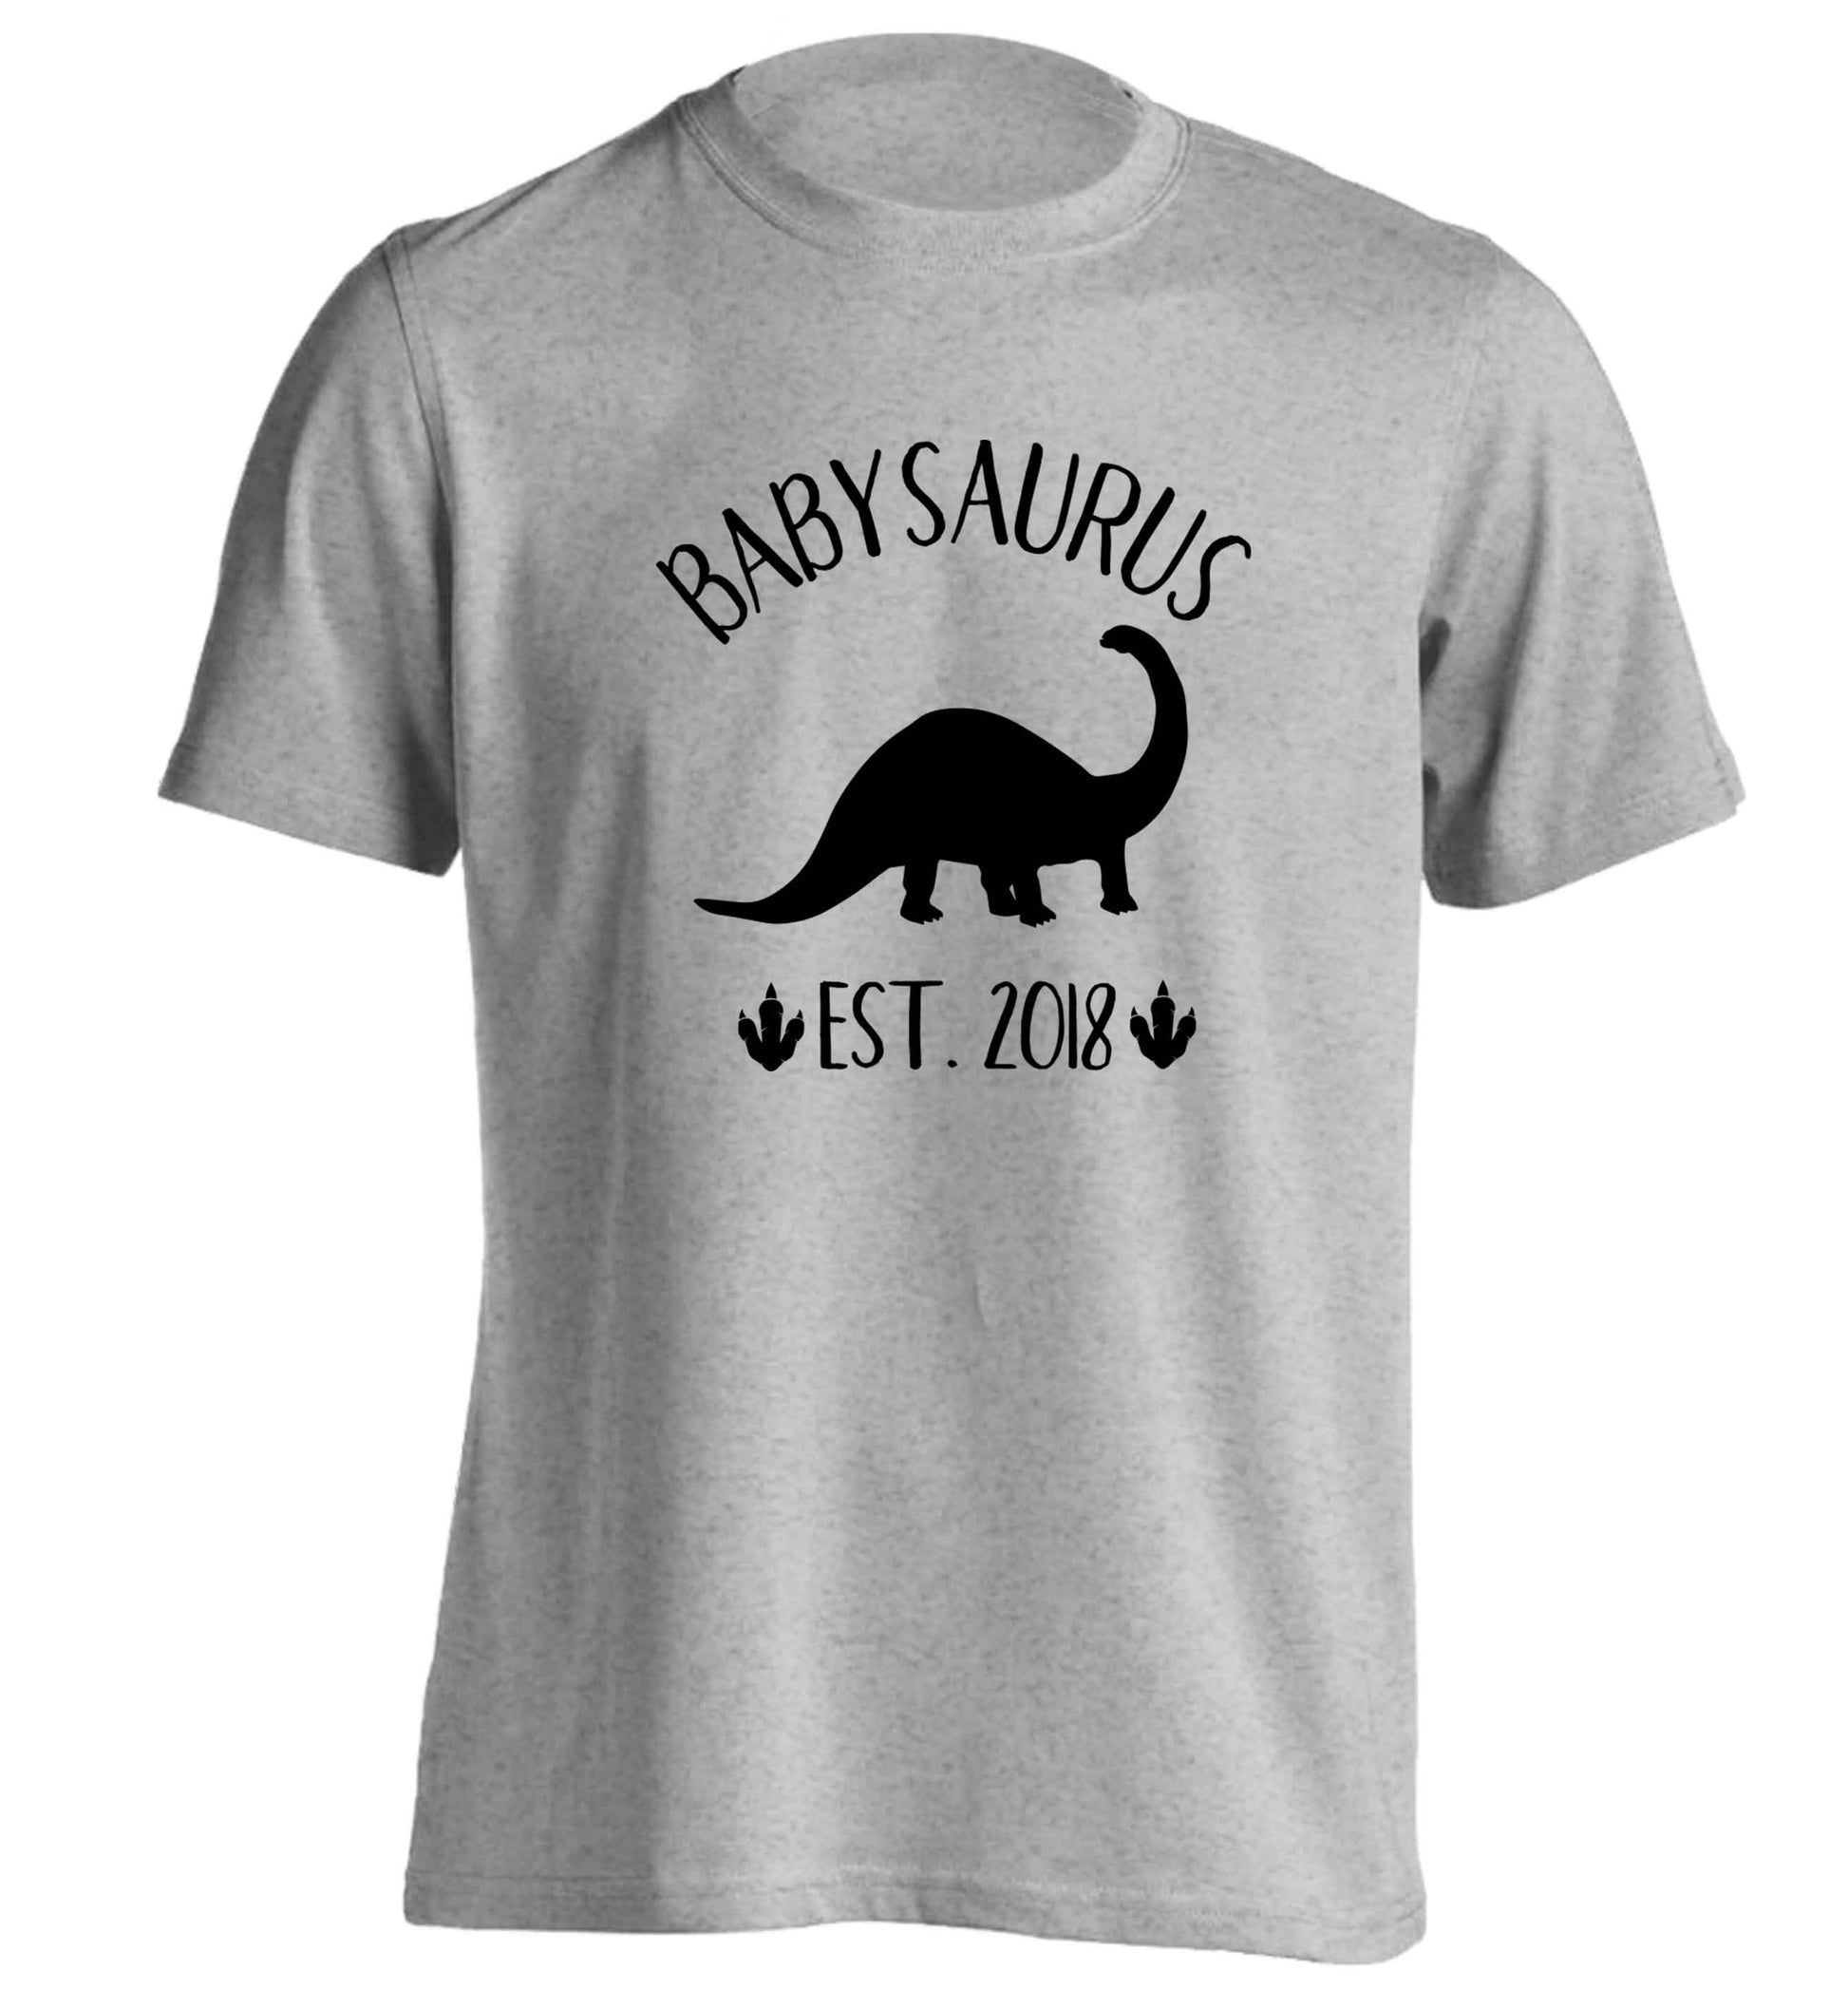 Personalised babysaurus since (custom date) adults unisex grey Tshirt 2XL